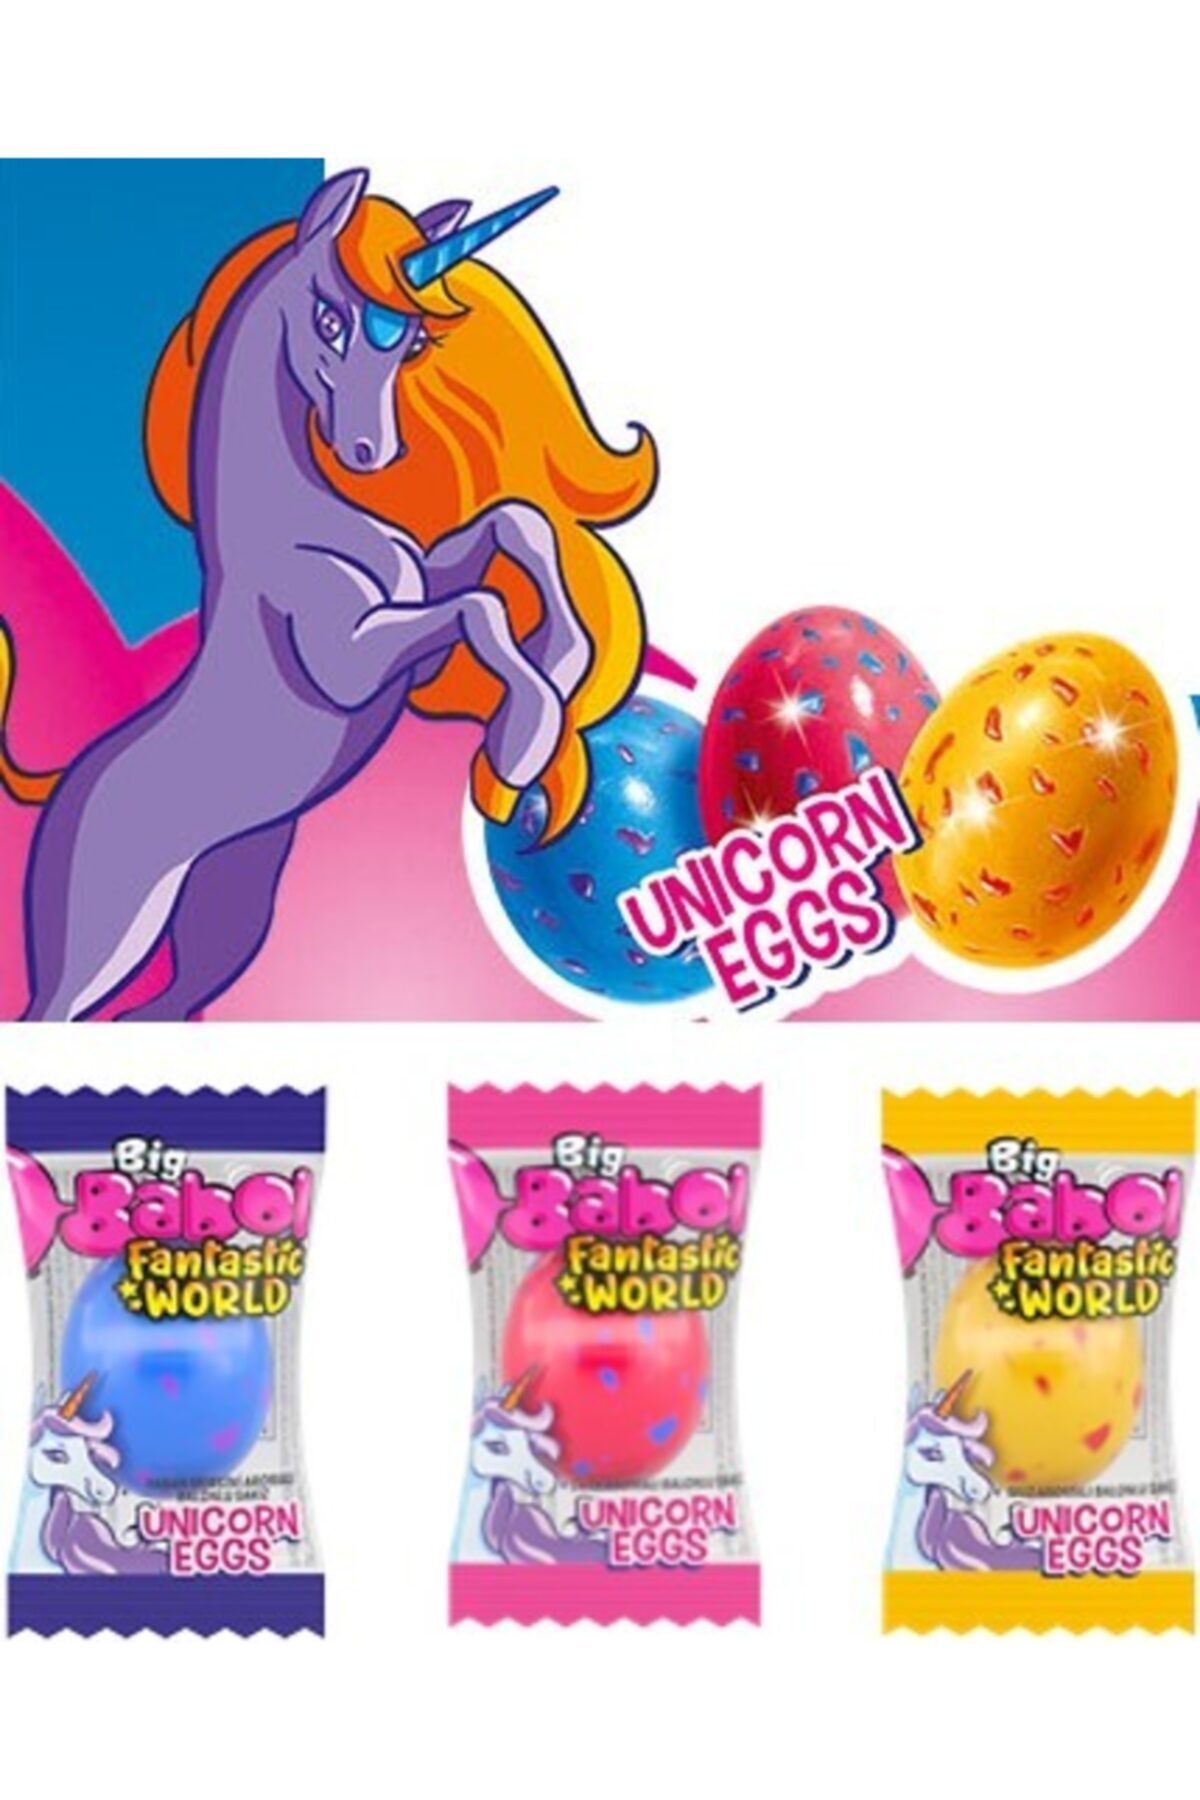 Big Babol Fantastic World Unicorn Eggs Mono 100 Adet X 5gr